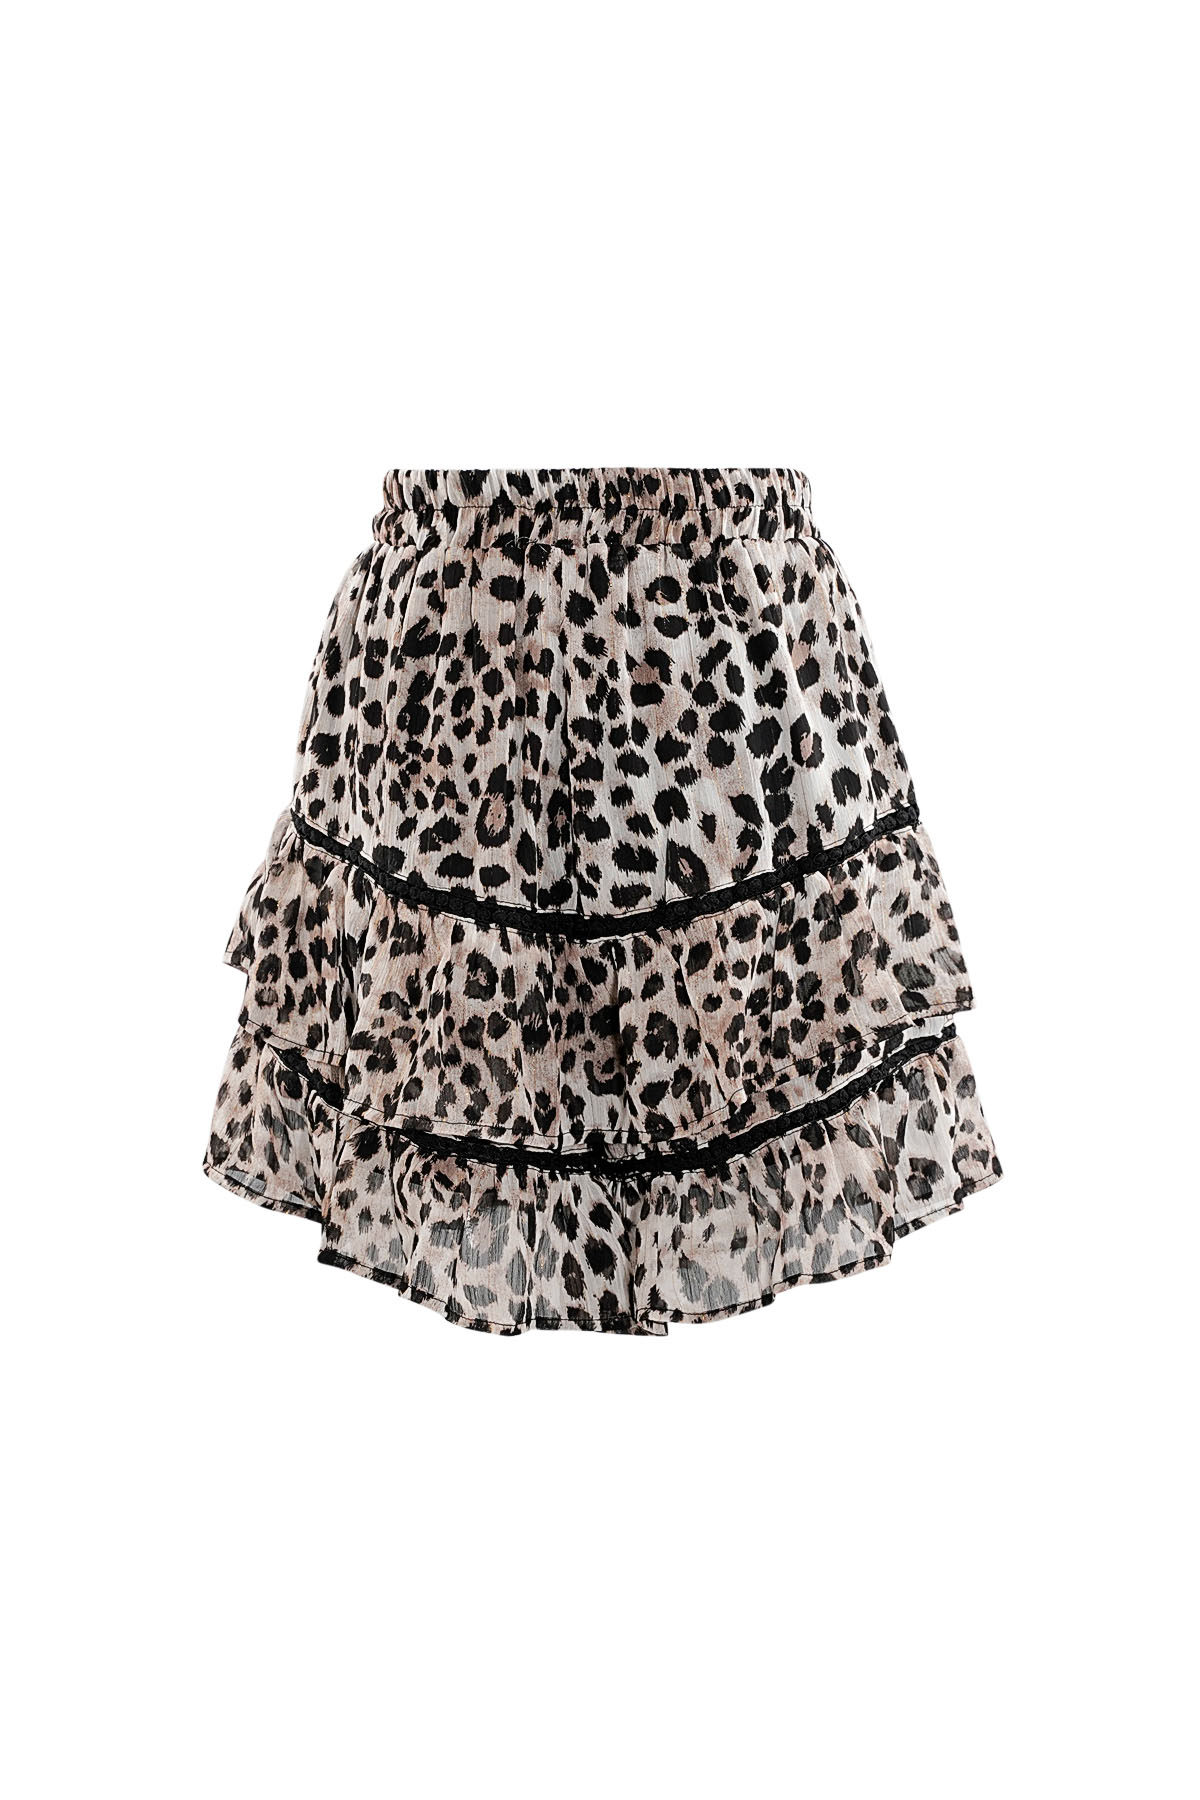 Layered leopard print skirt - brown